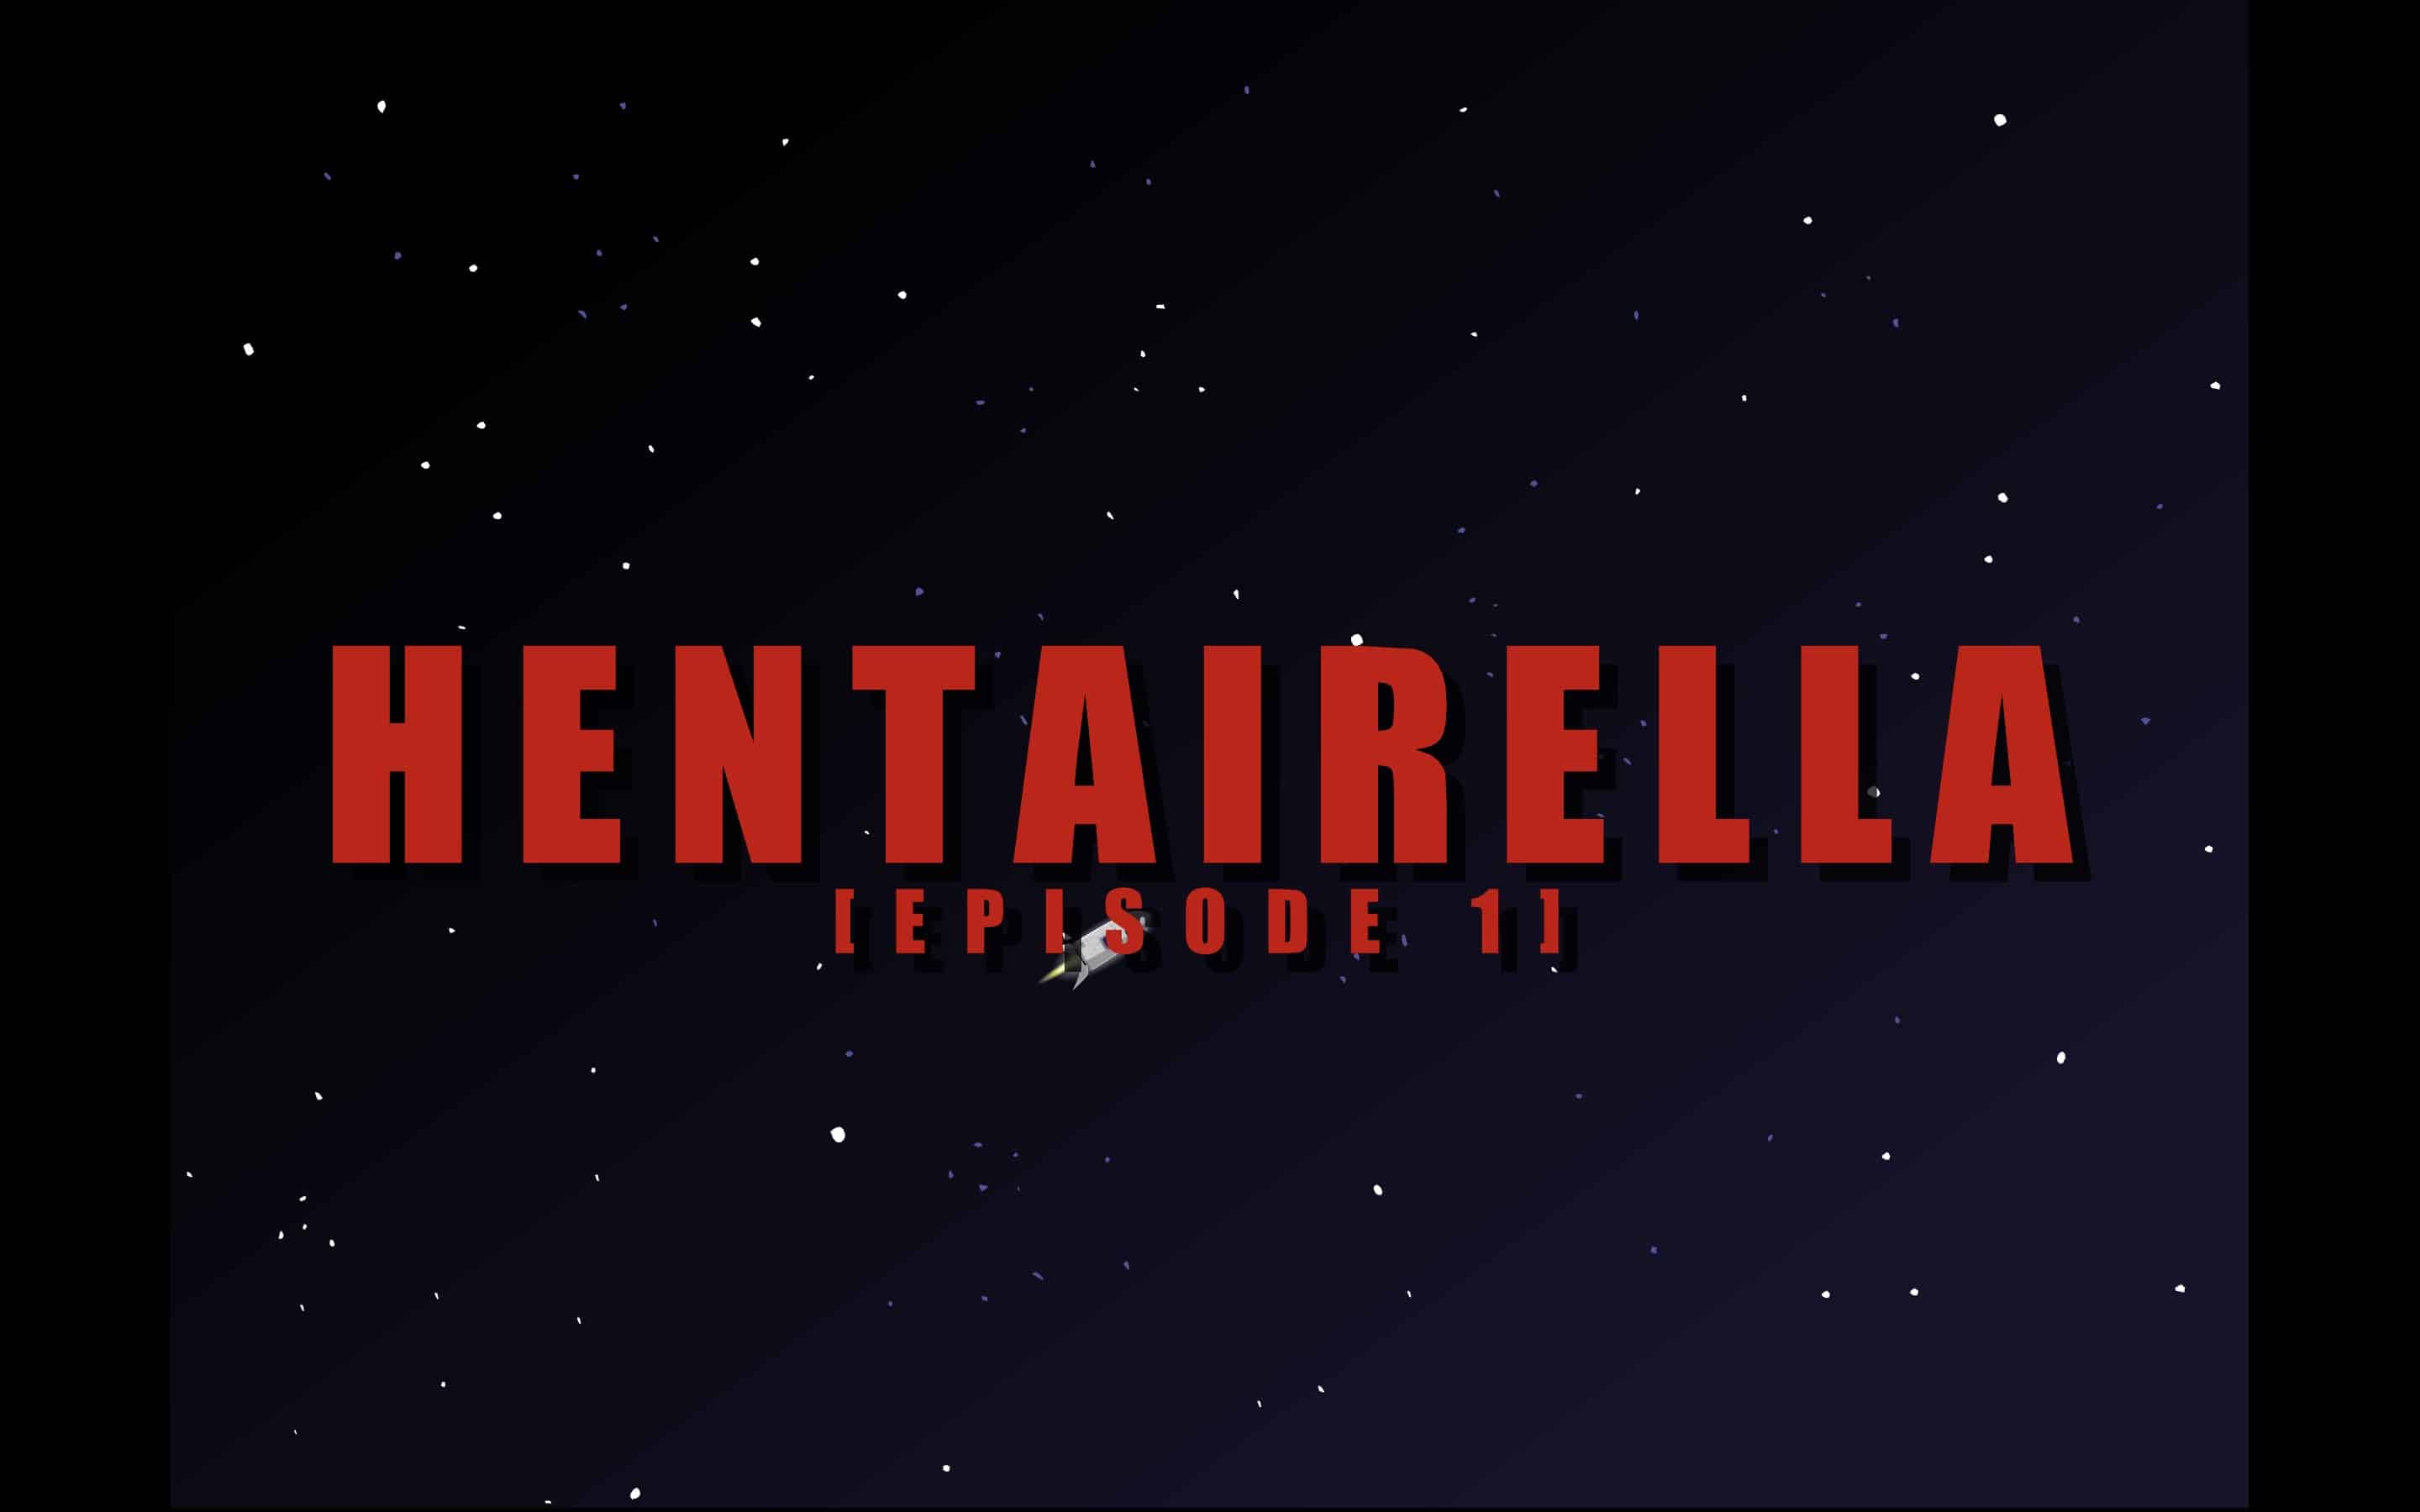 Hentairella - Episode I